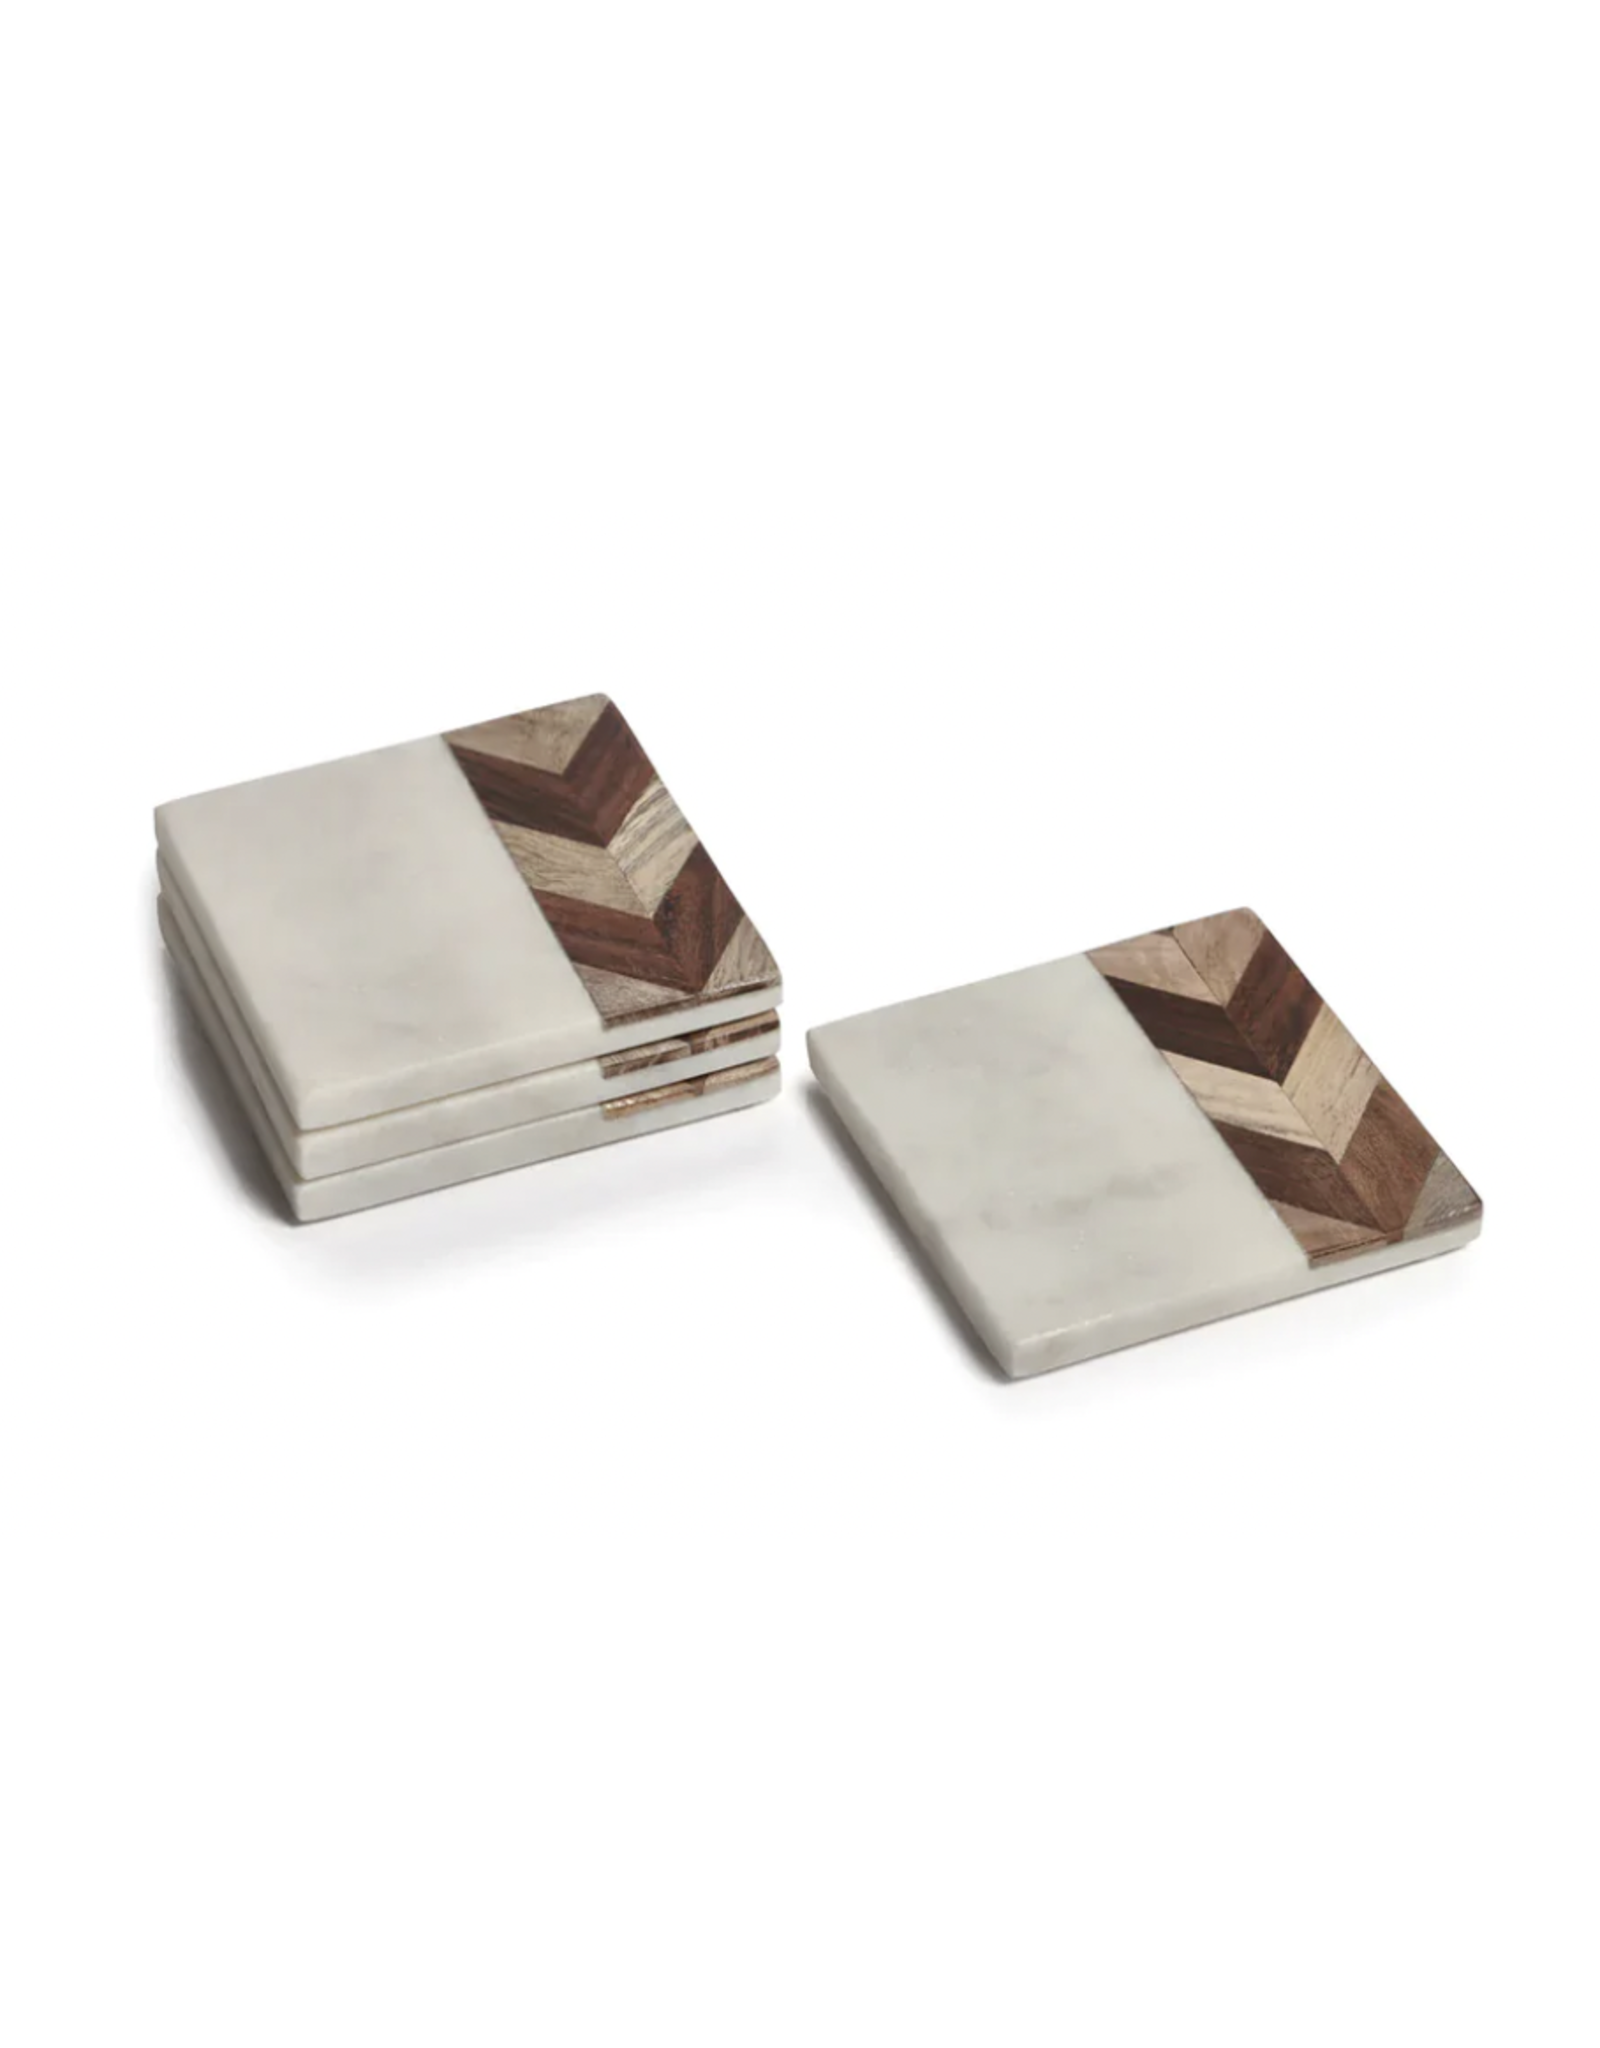 Zodax Marble & Chevron Wood Design Coasters, set of 4